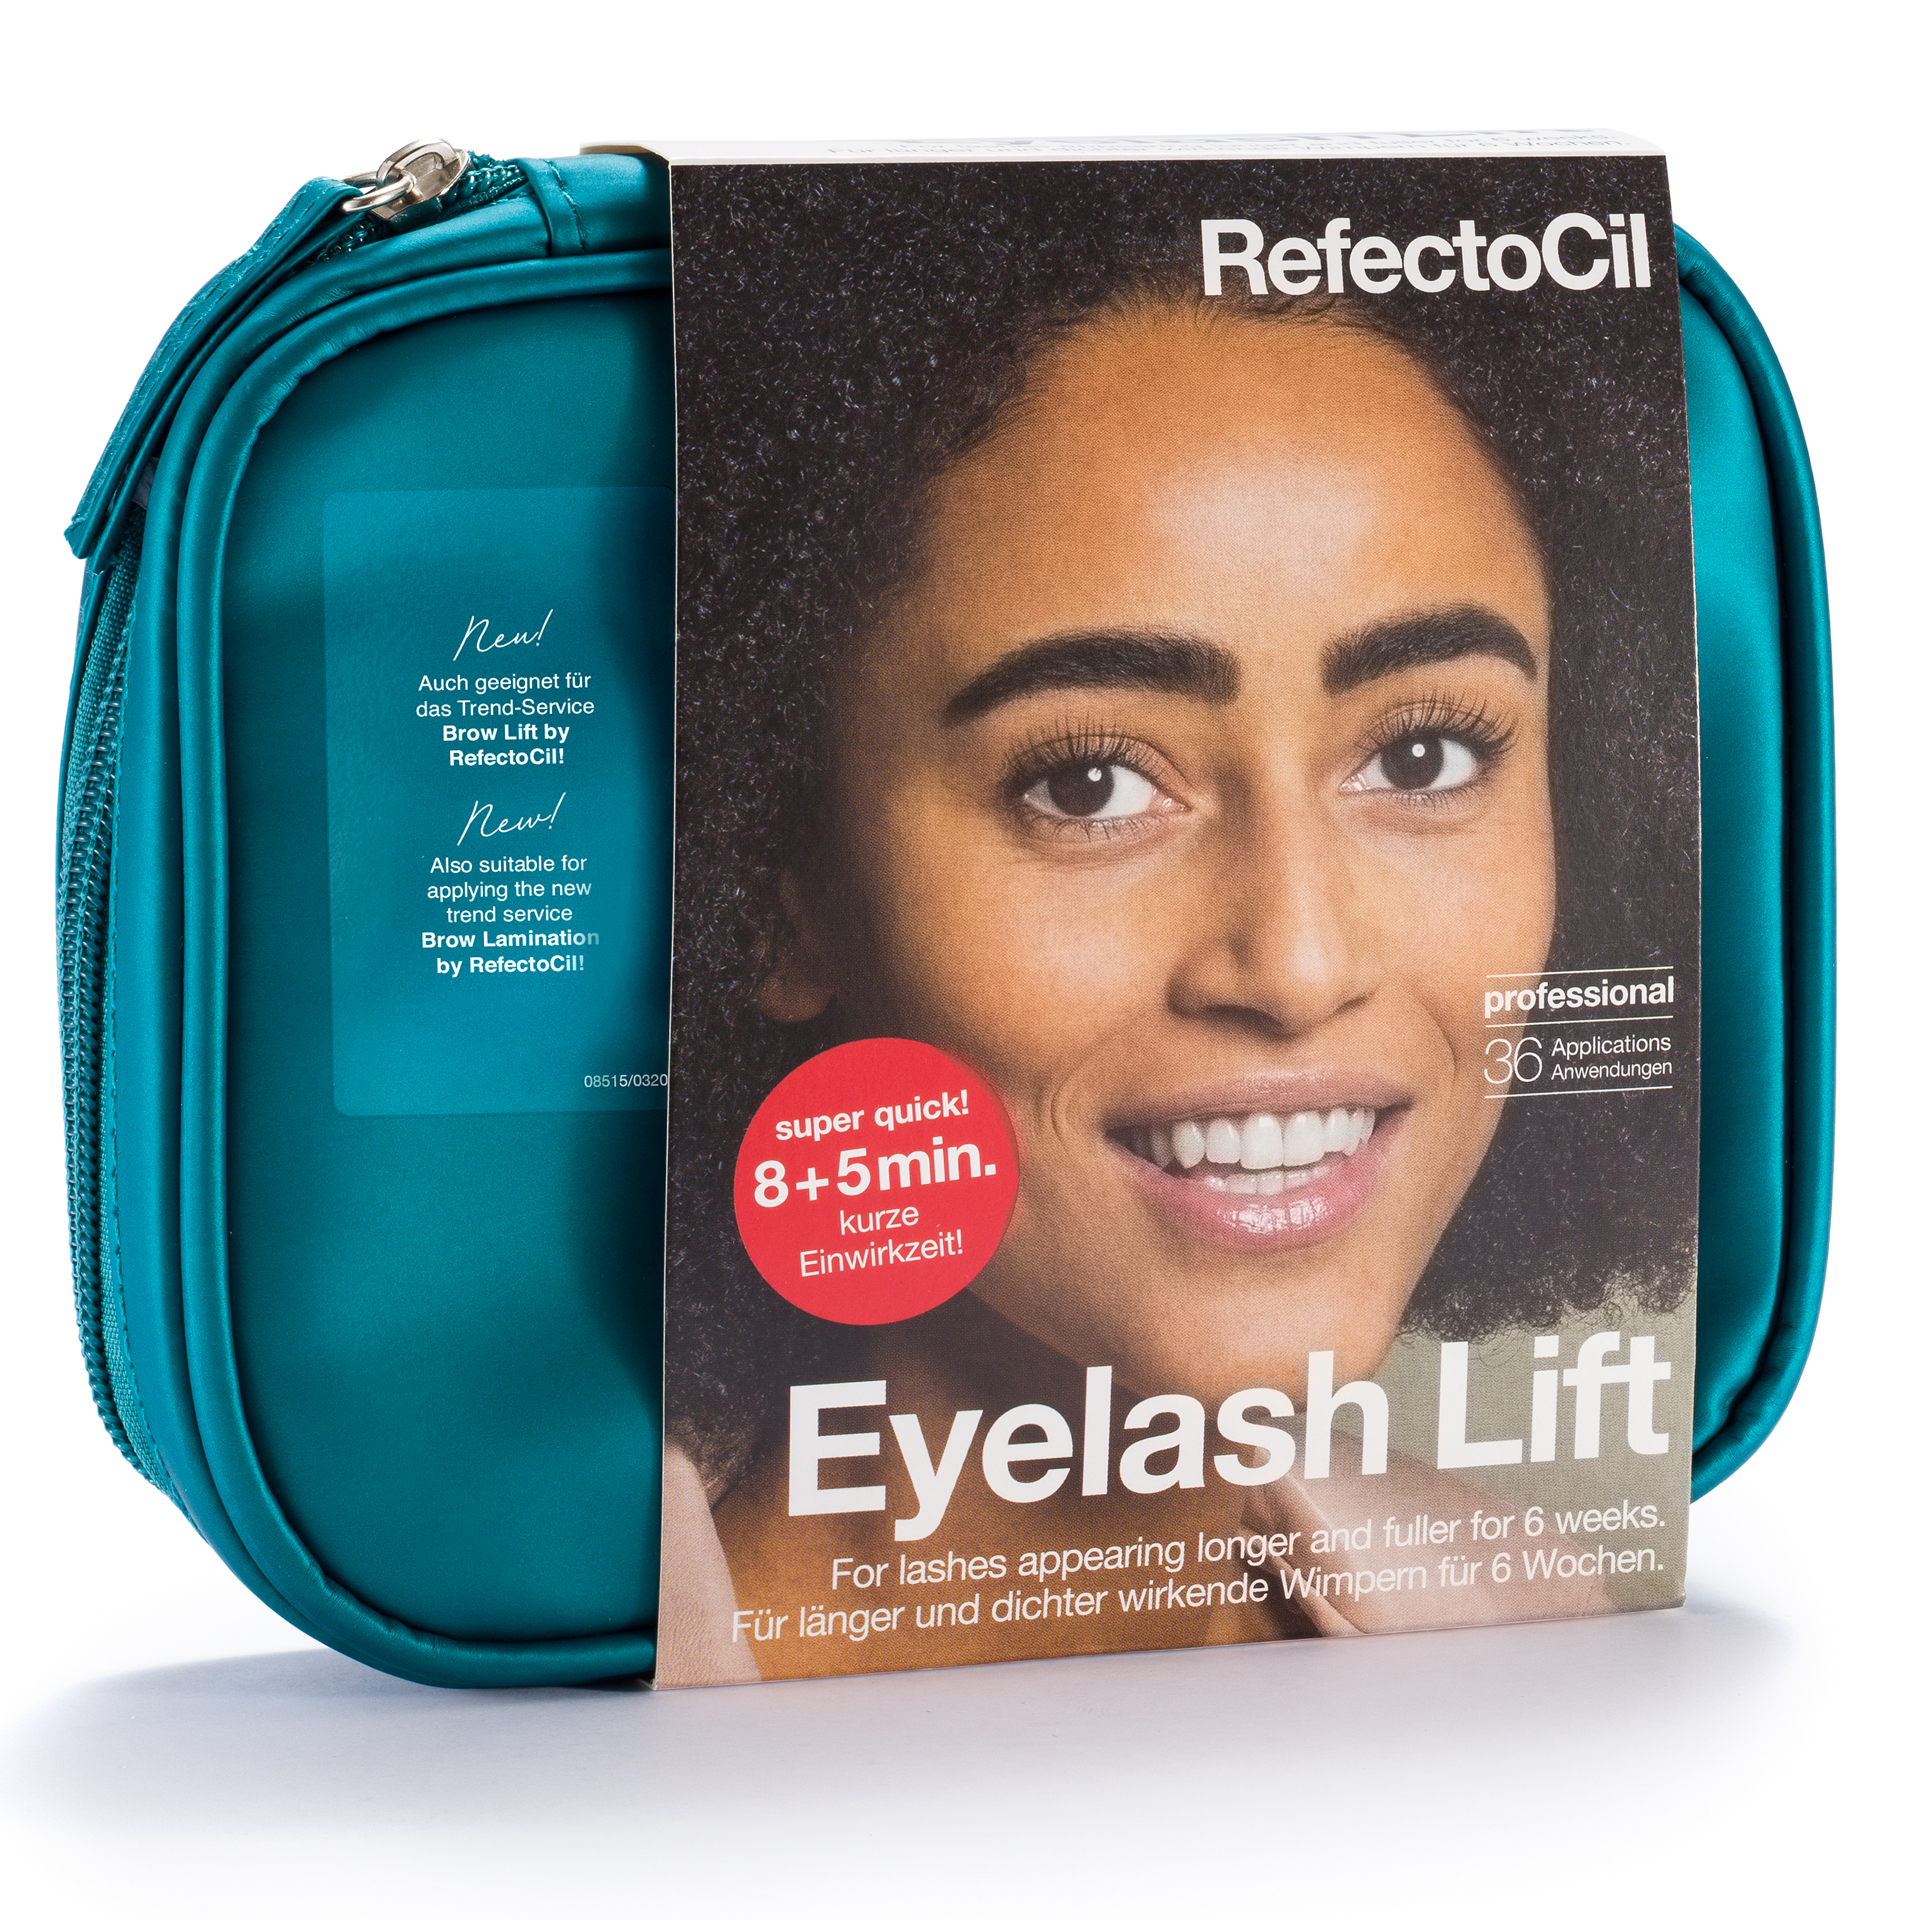 RefectoCil® "Eyelash Lift" Kit